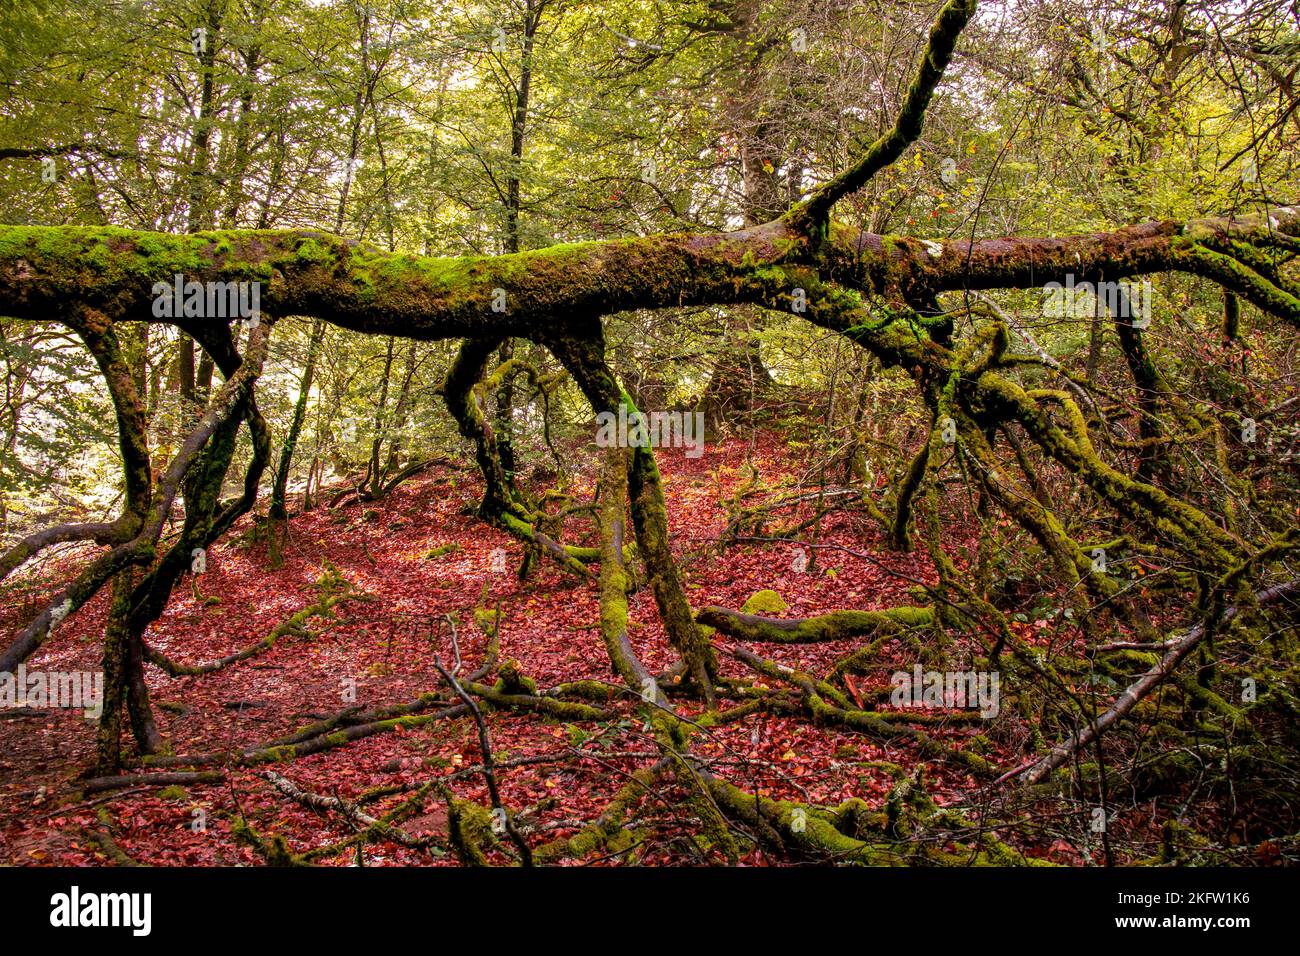 Otoño en la selva de Irati, sendero de Anbulolatz, Pirineo navarro, Espagne Banque D'Images